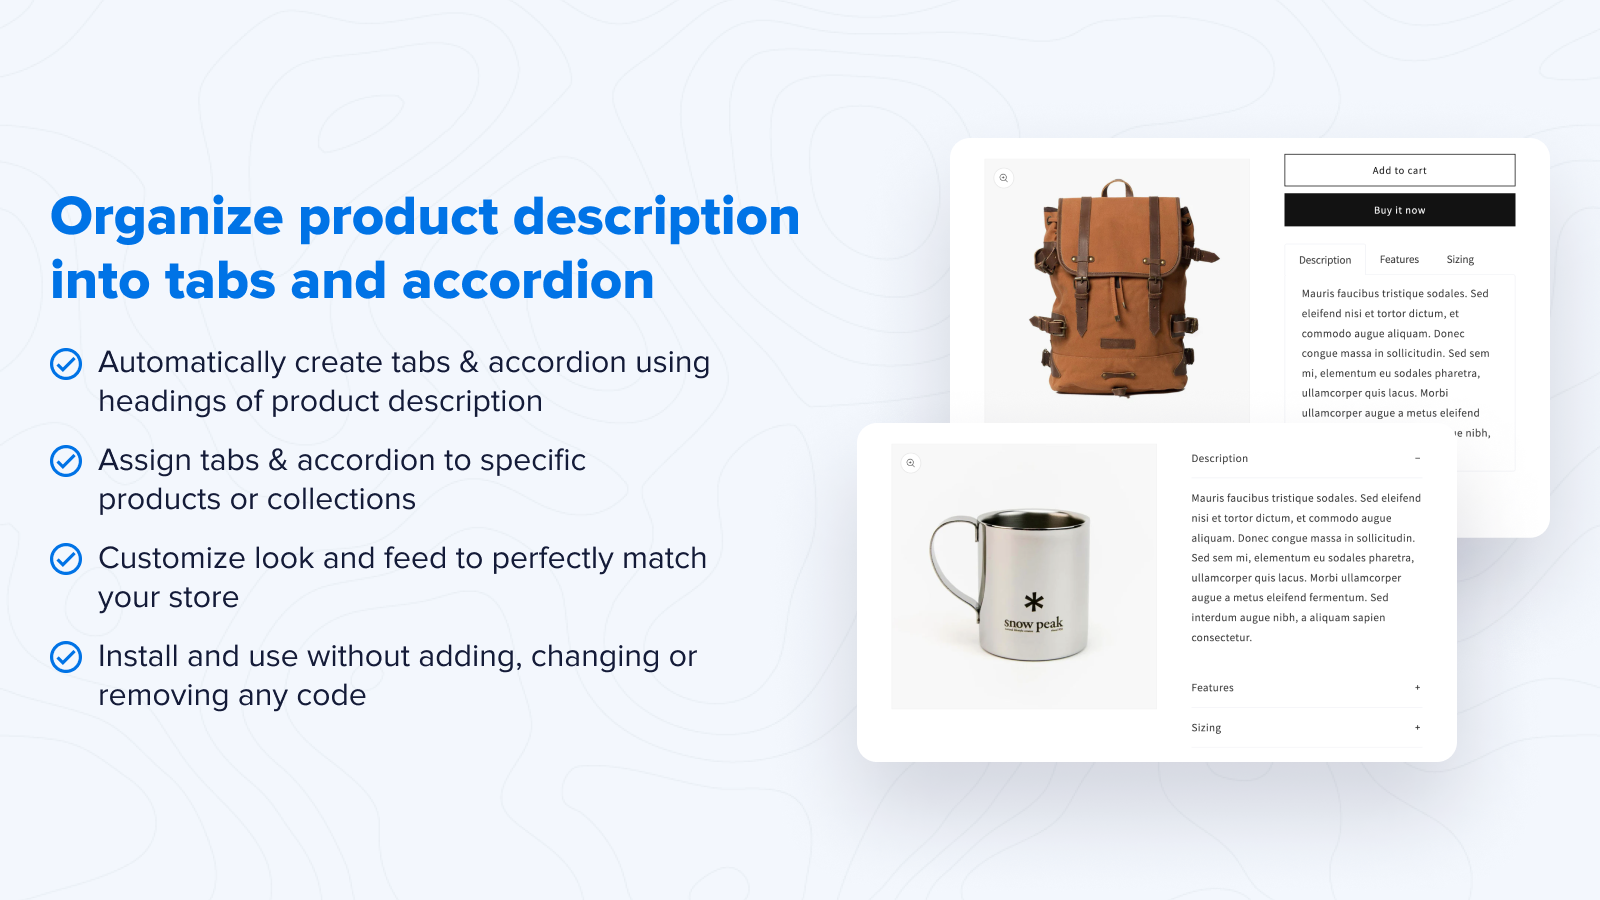 Organize product description into tabs and accordion